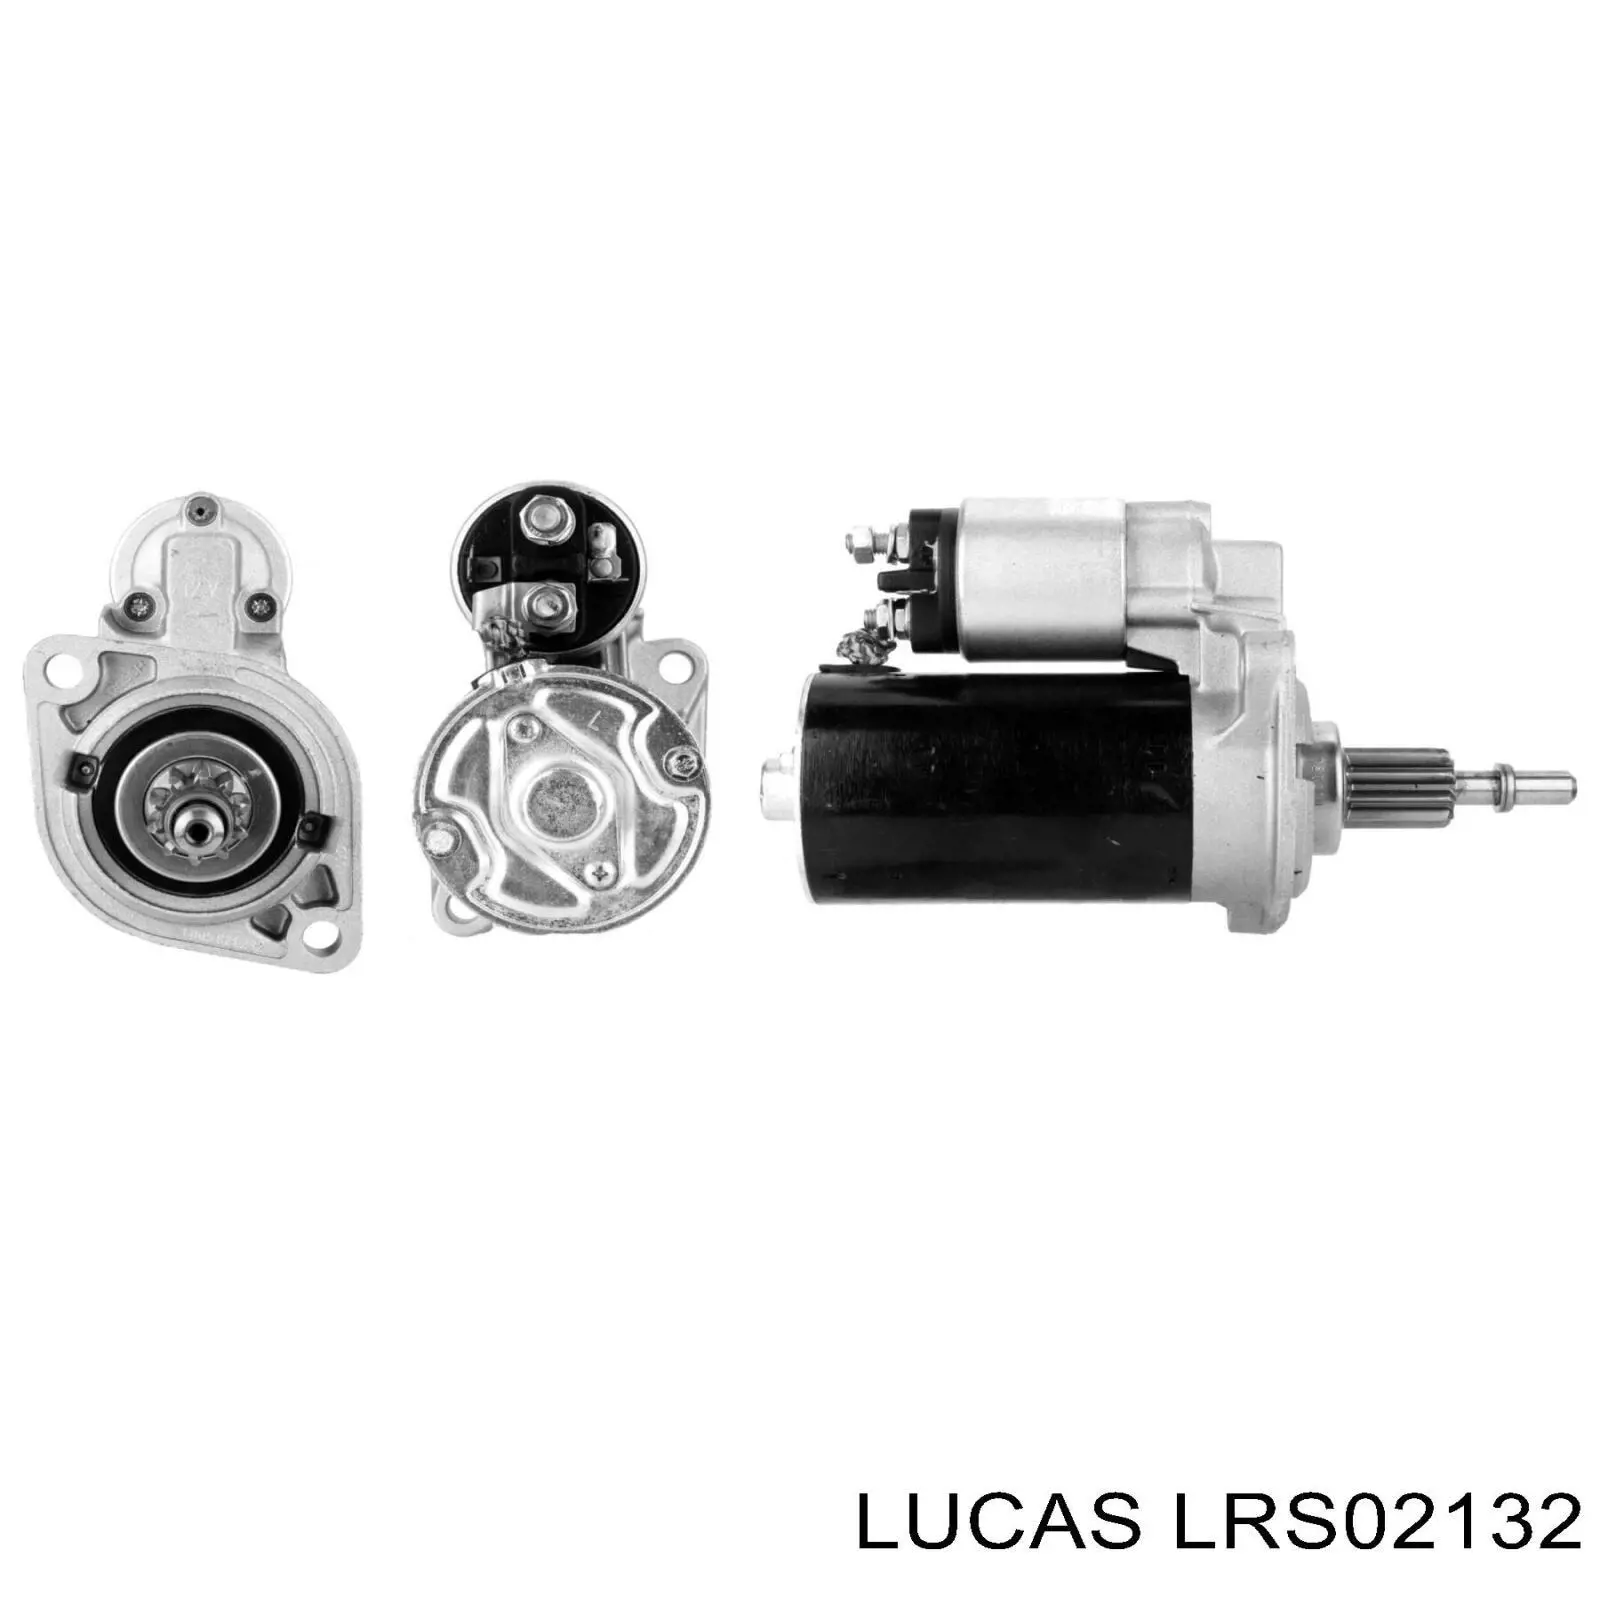 Motor de arranque LRS02132 Lucas